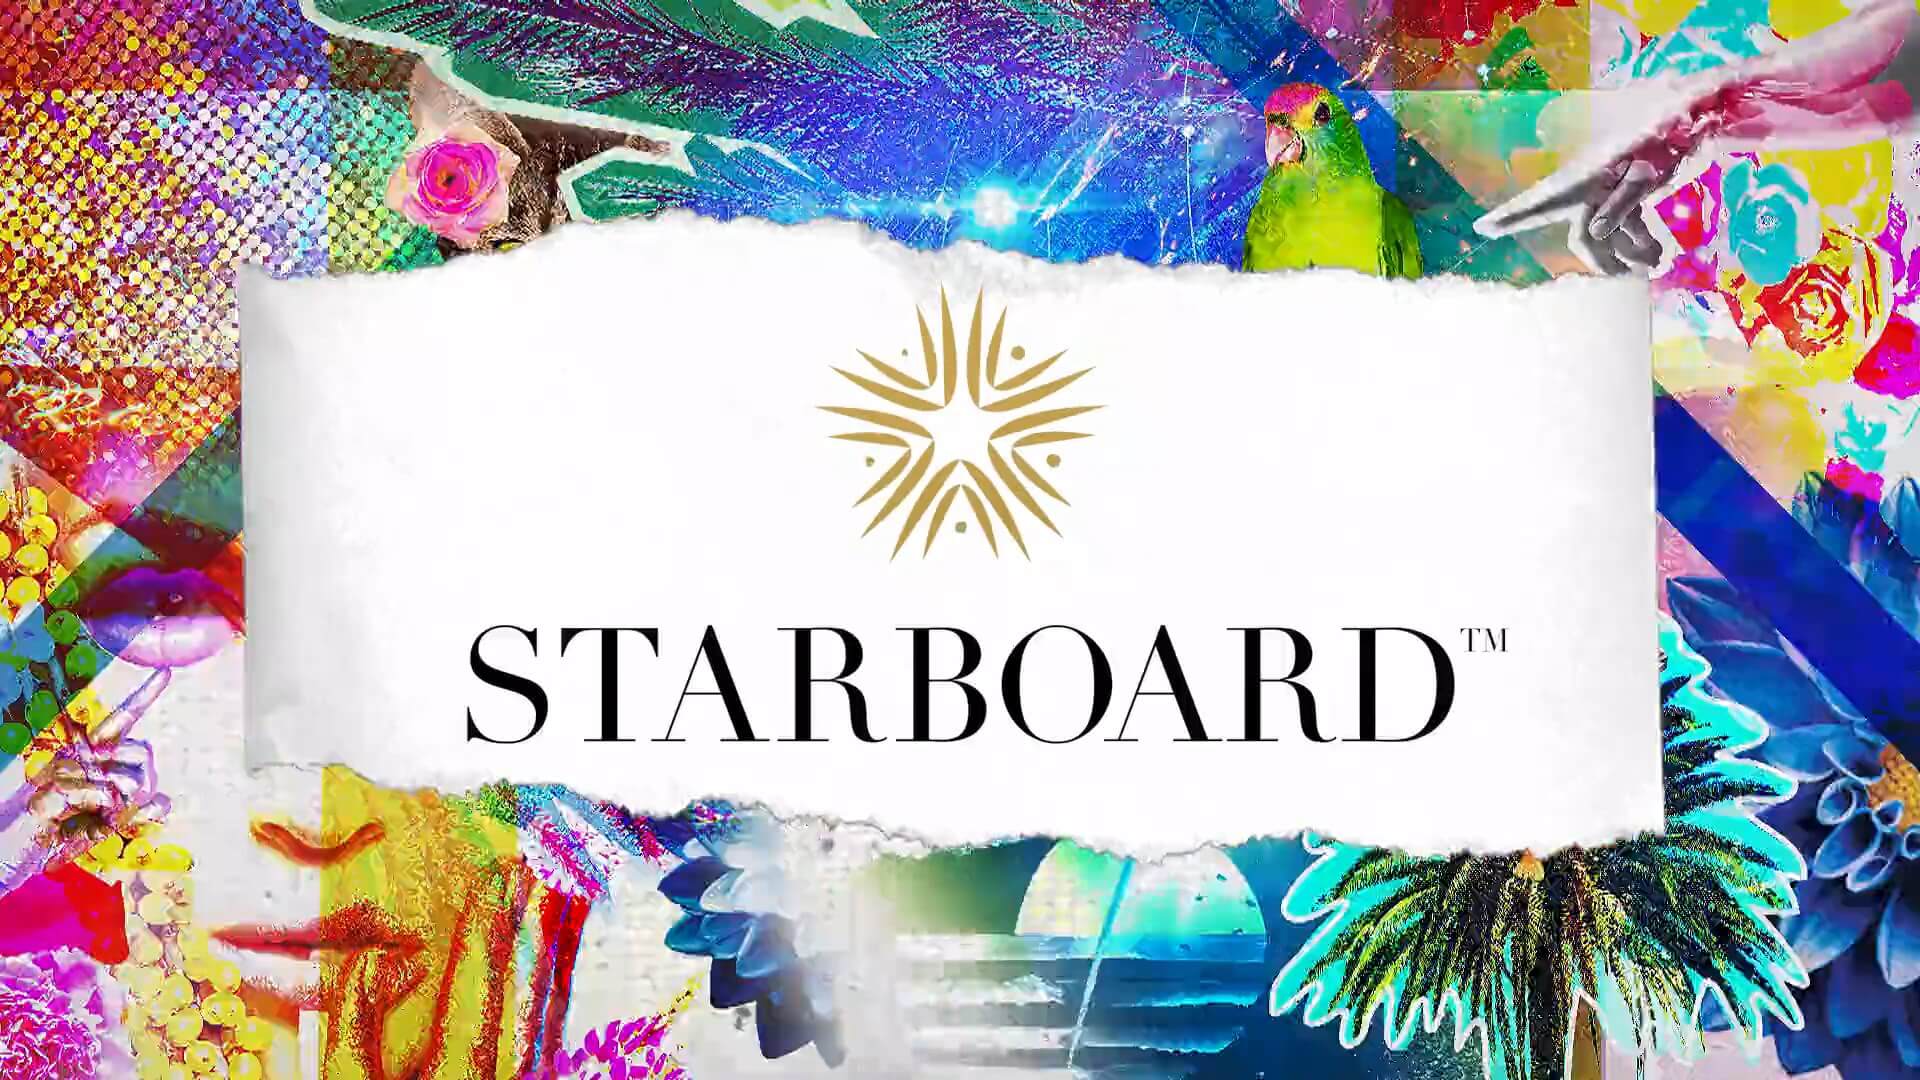 Starboard unveils 'Shop Fun' retail experiences on Carnival Horizon